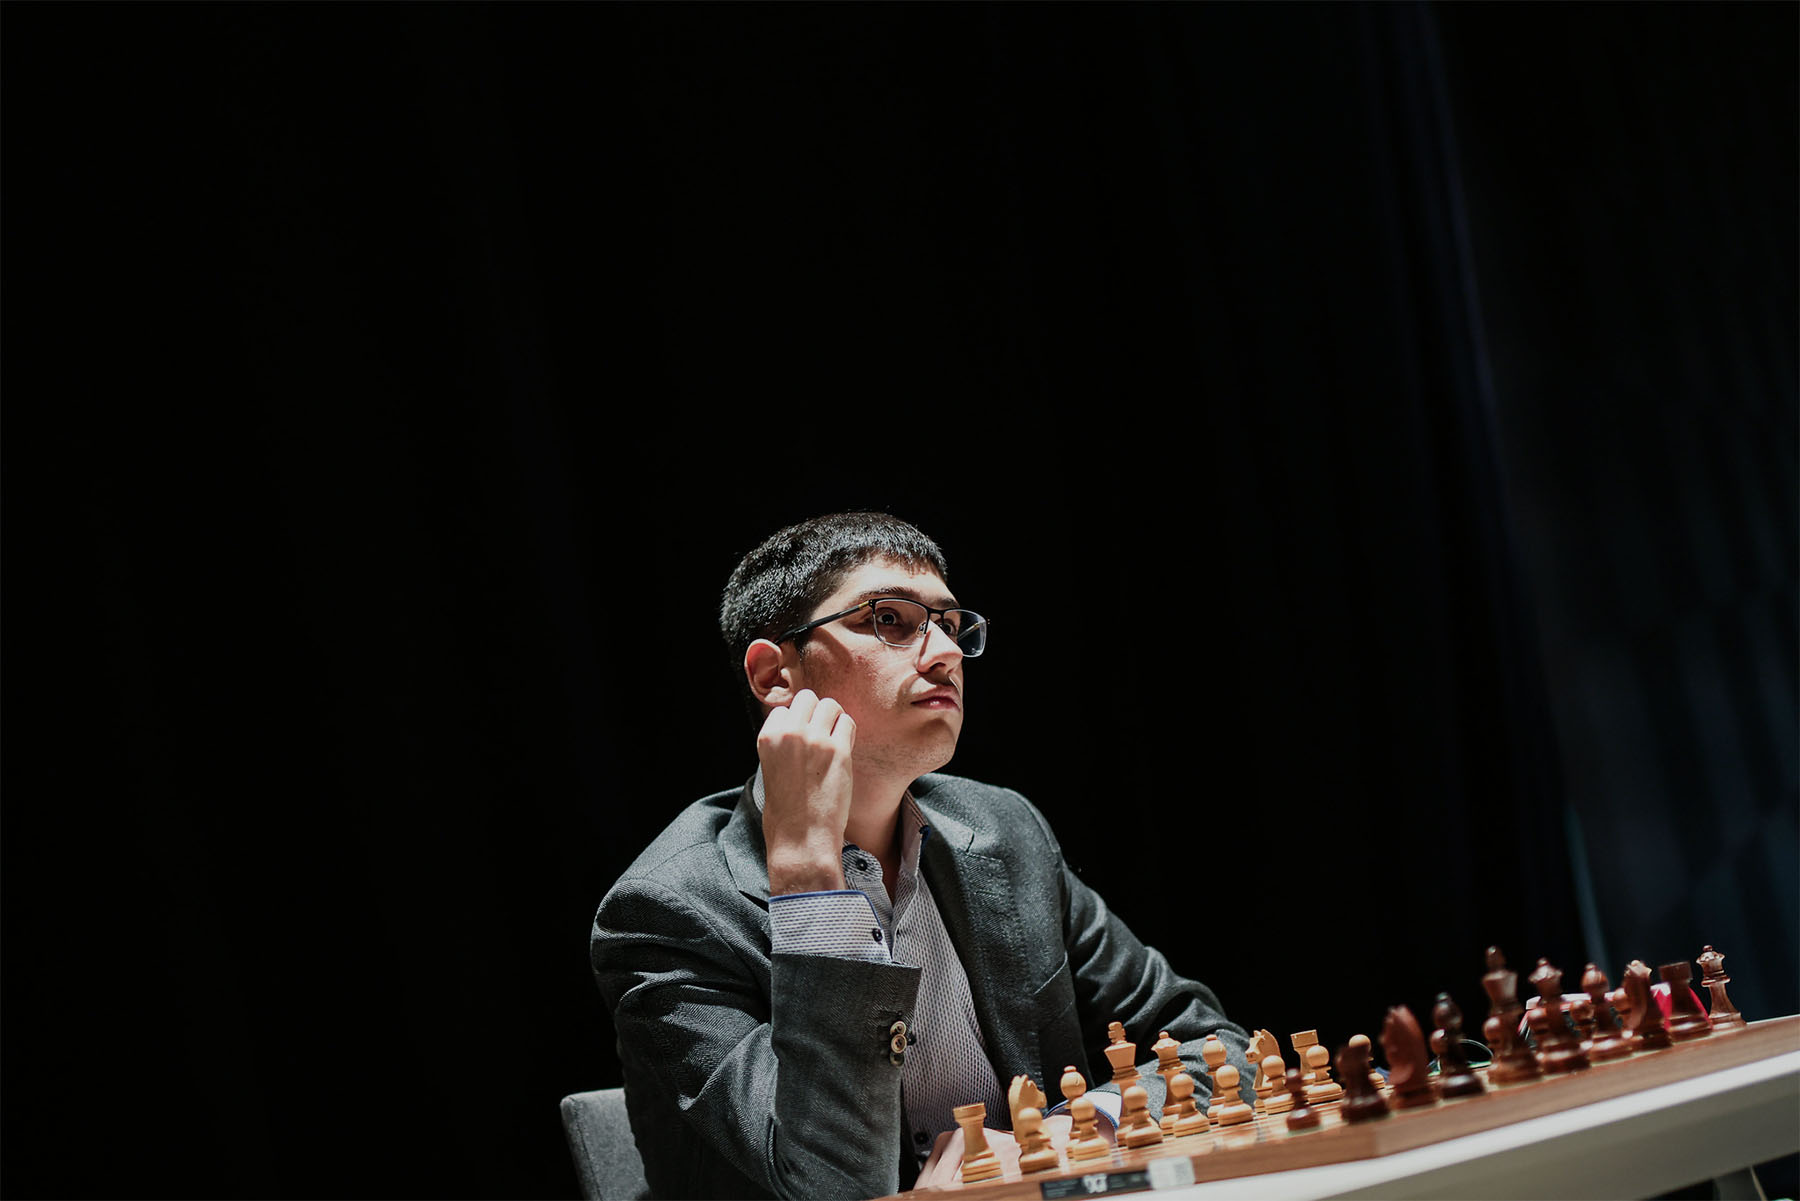 Chess - Why is/isn't Alireza Firouzja a traitor? What was the propaganda  exactly? : r/askasia